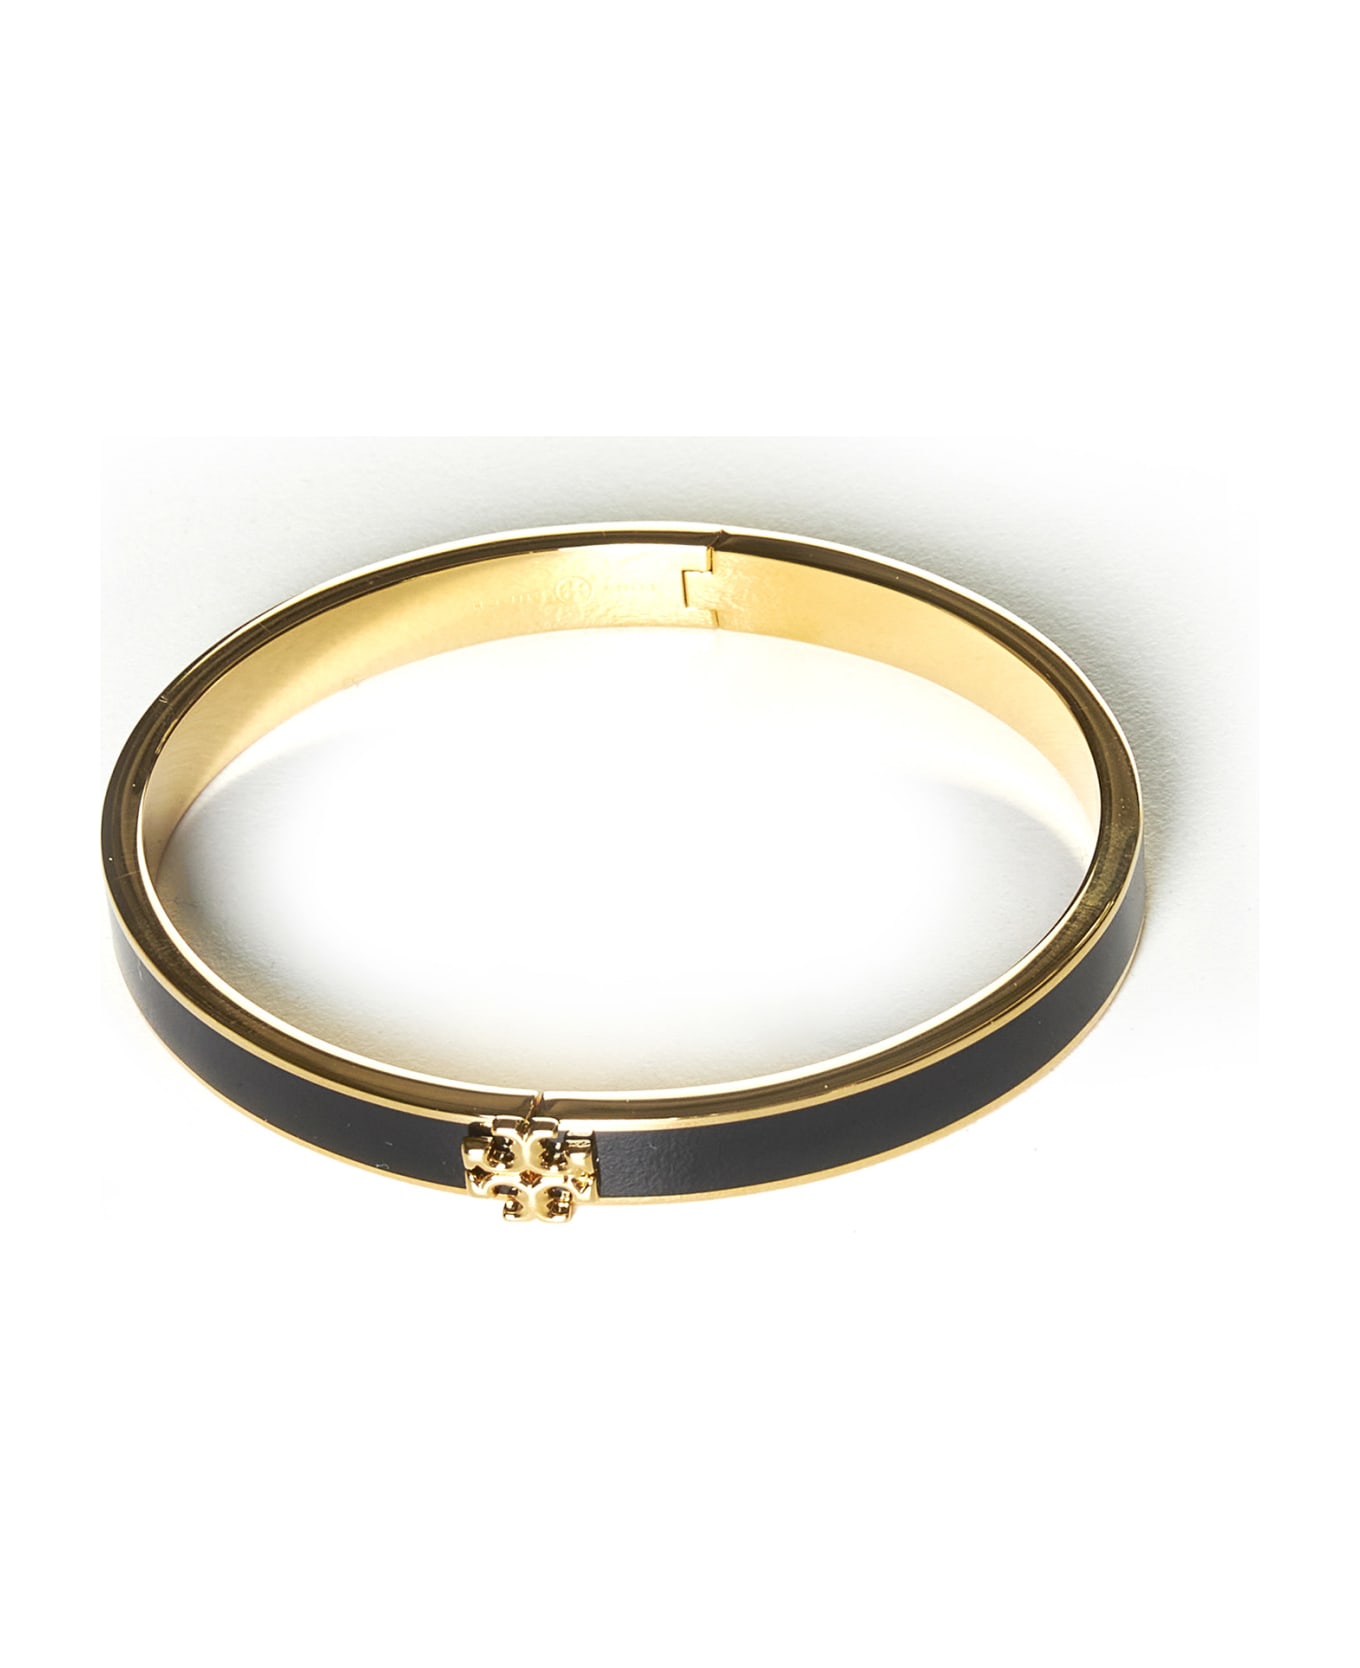 Tory Burch Gold And Black Brass Kira Bracelet - Tory gold / black ブレスレット